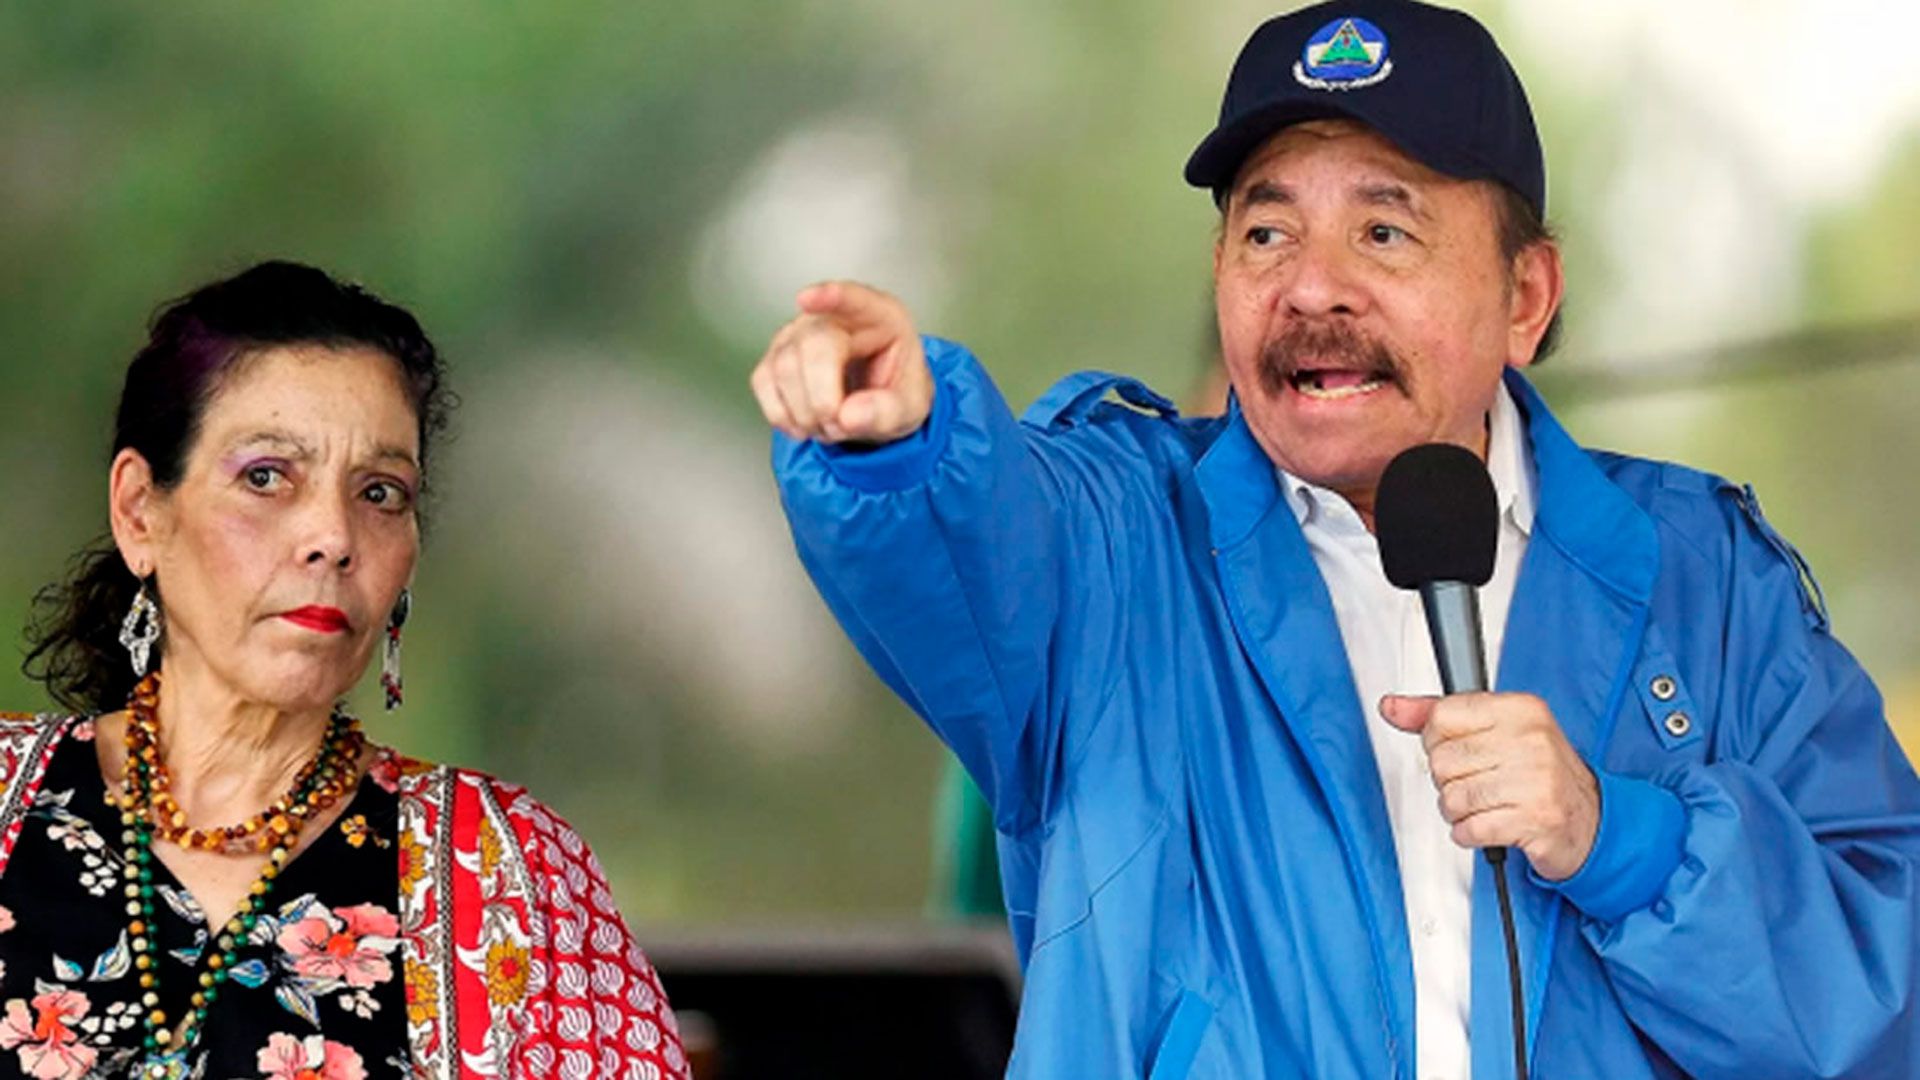 ANÁLISIS: Daniel Ortega vs. Cristiana Chamorro